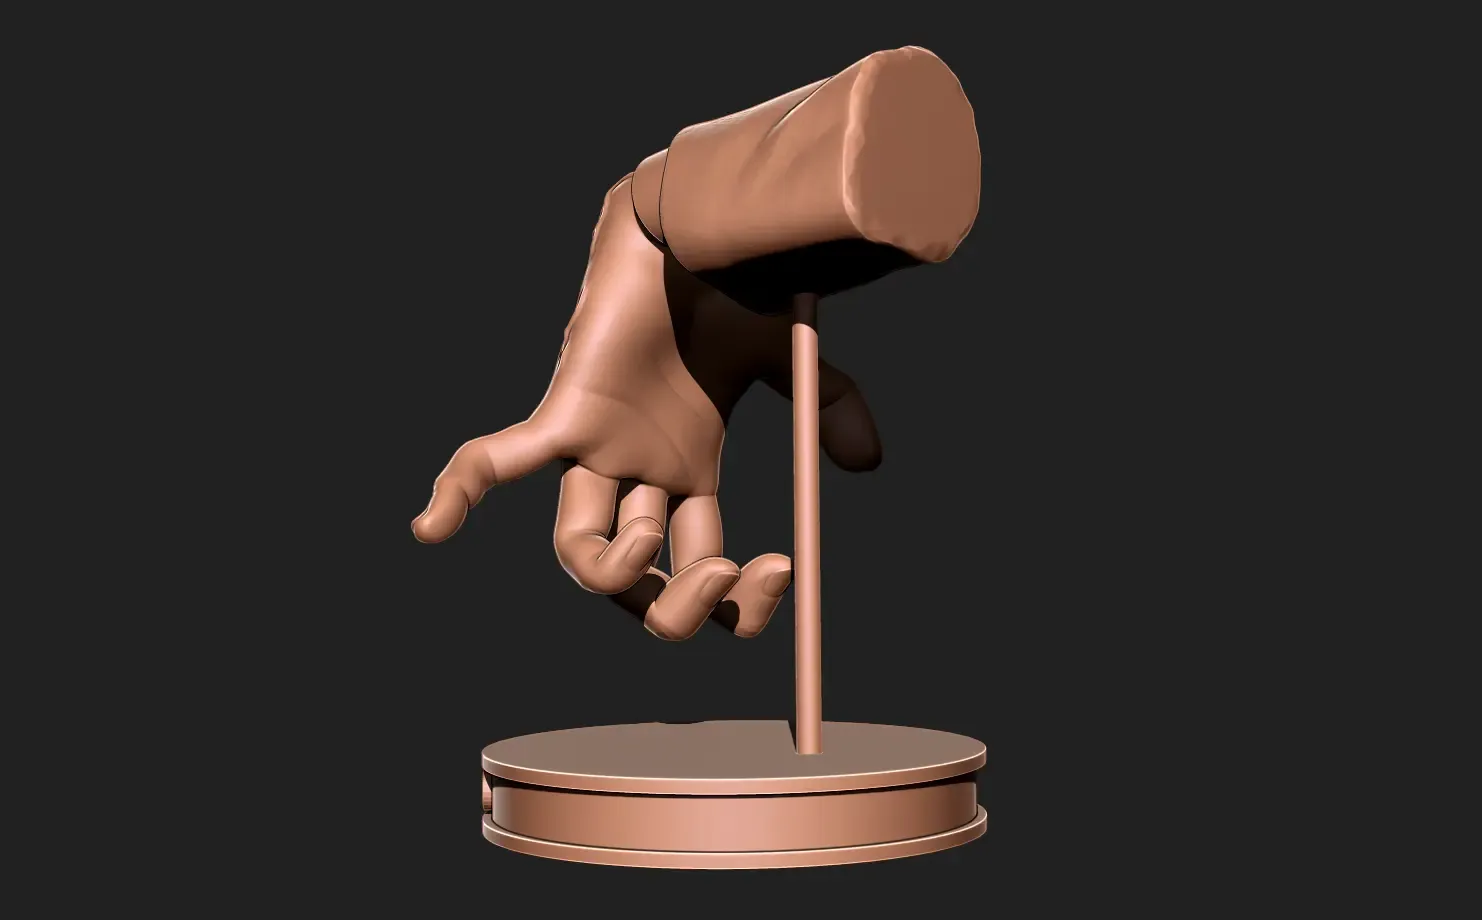 Enmu Hand - Demon Slayer 3D Print model